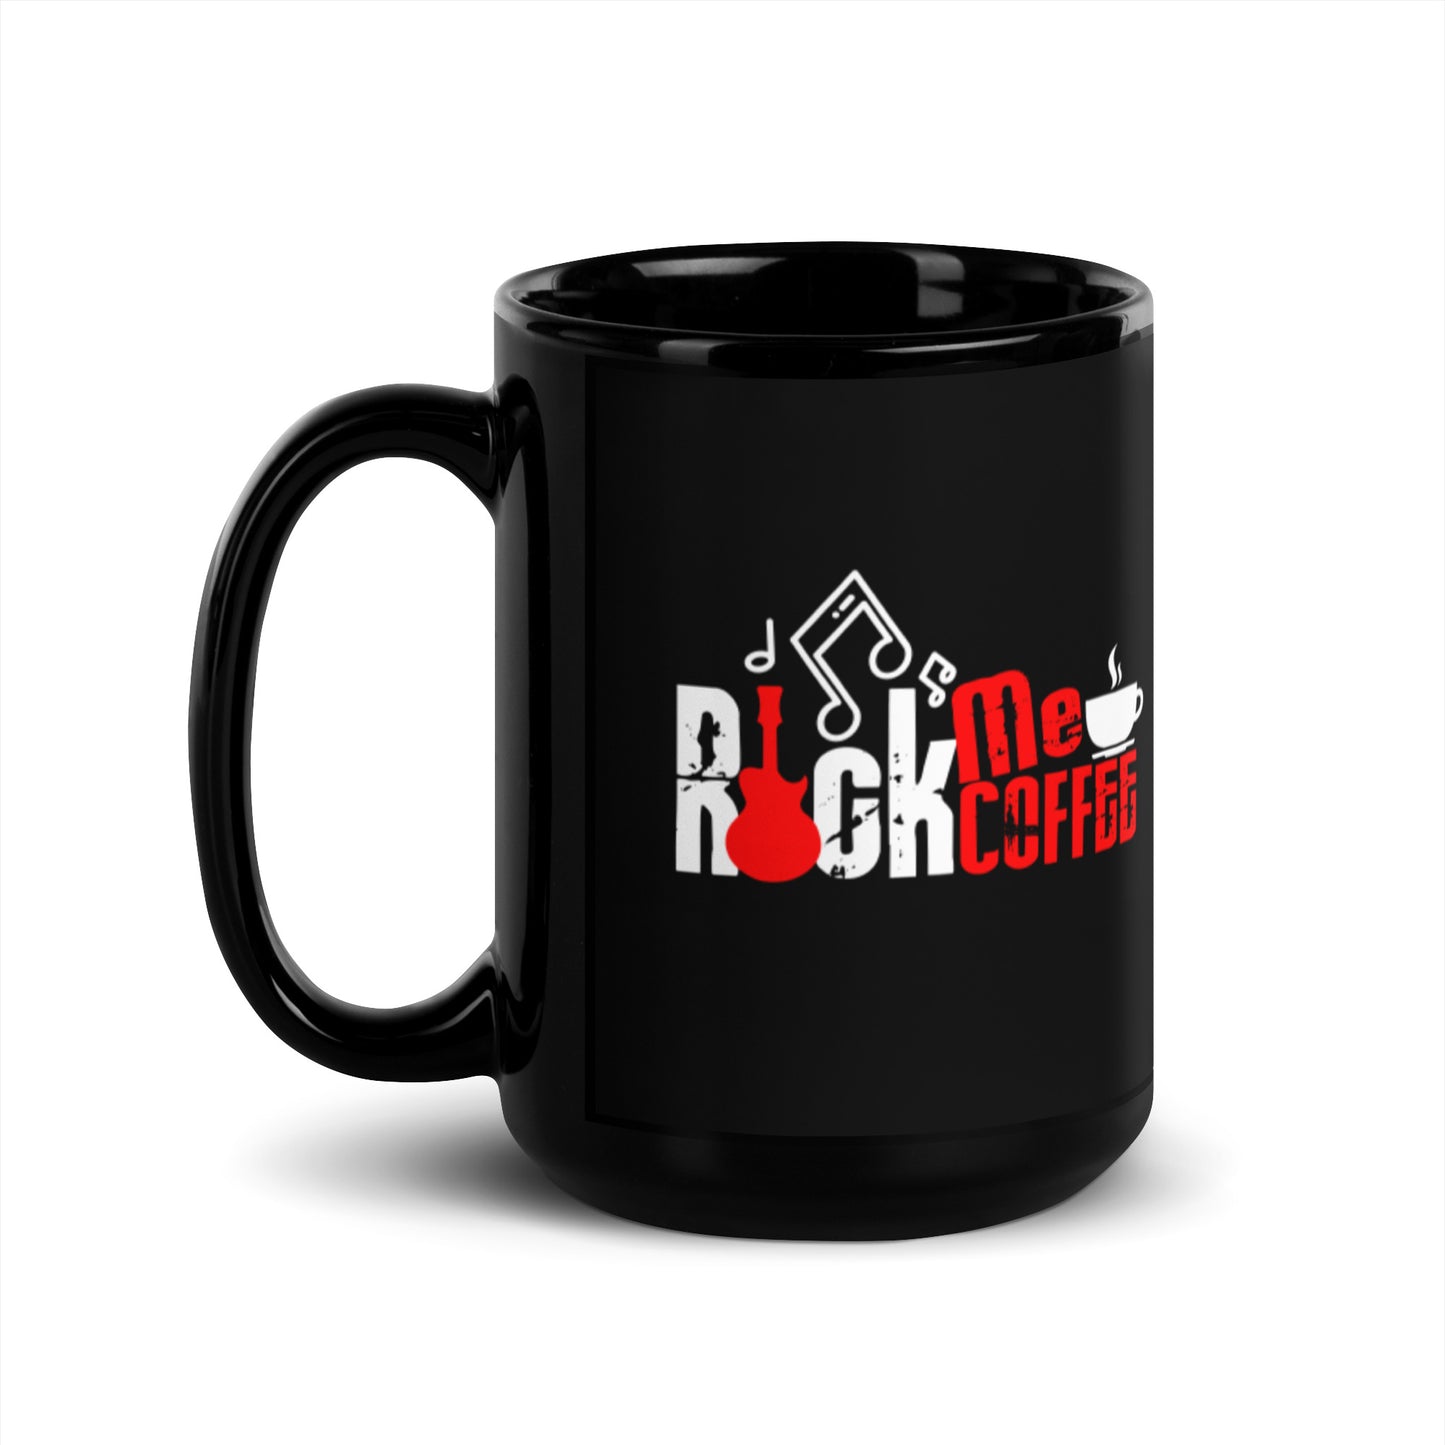 ROCK ME COFFEE - Black Glossy Mug